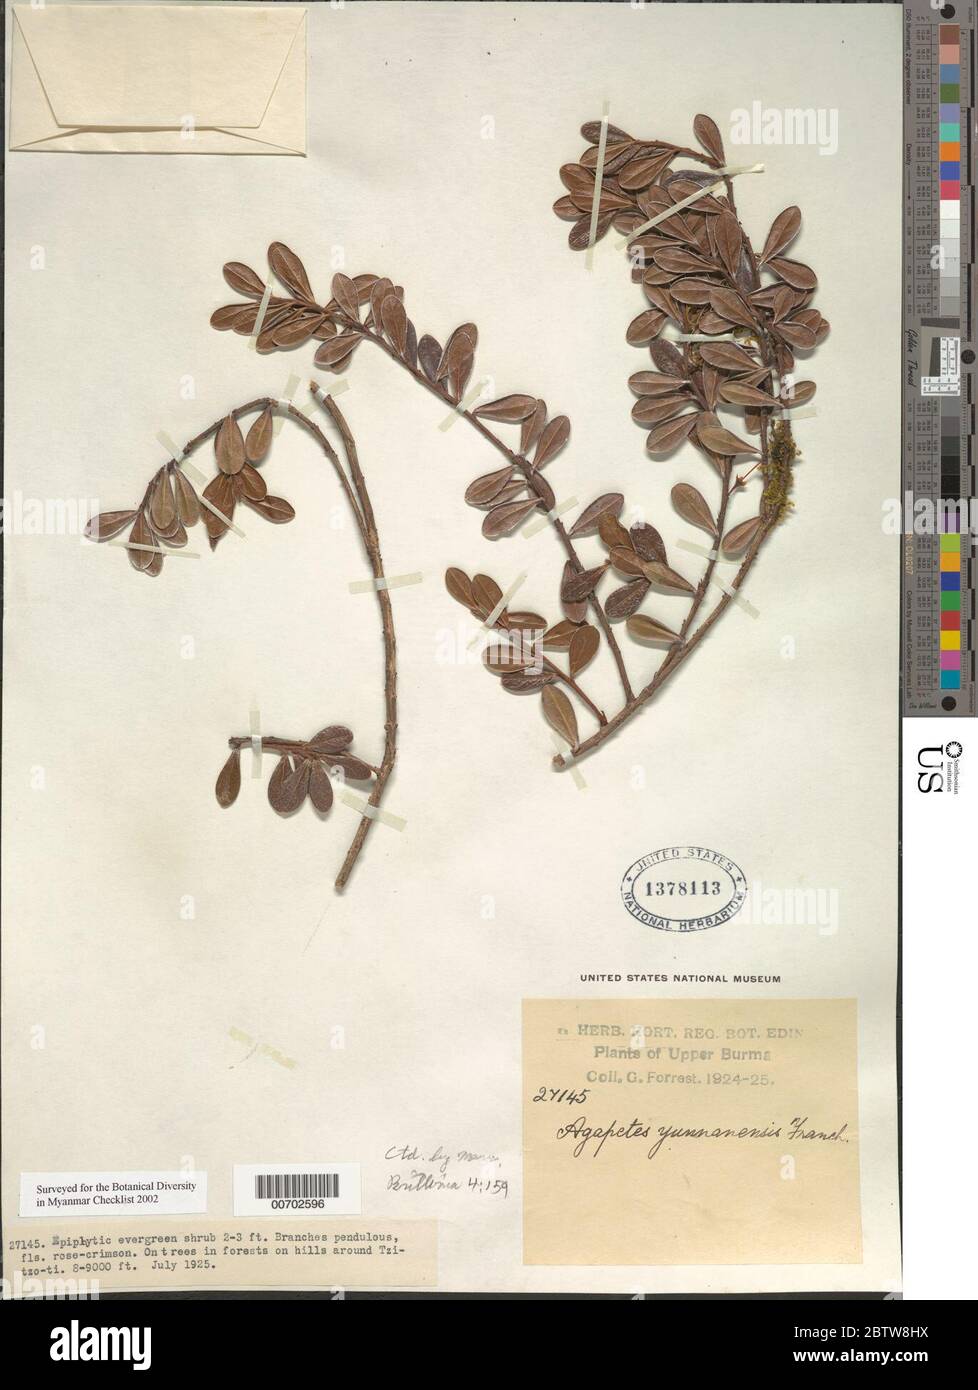 Agapetes yunnanensis Franch. Banque D'Images